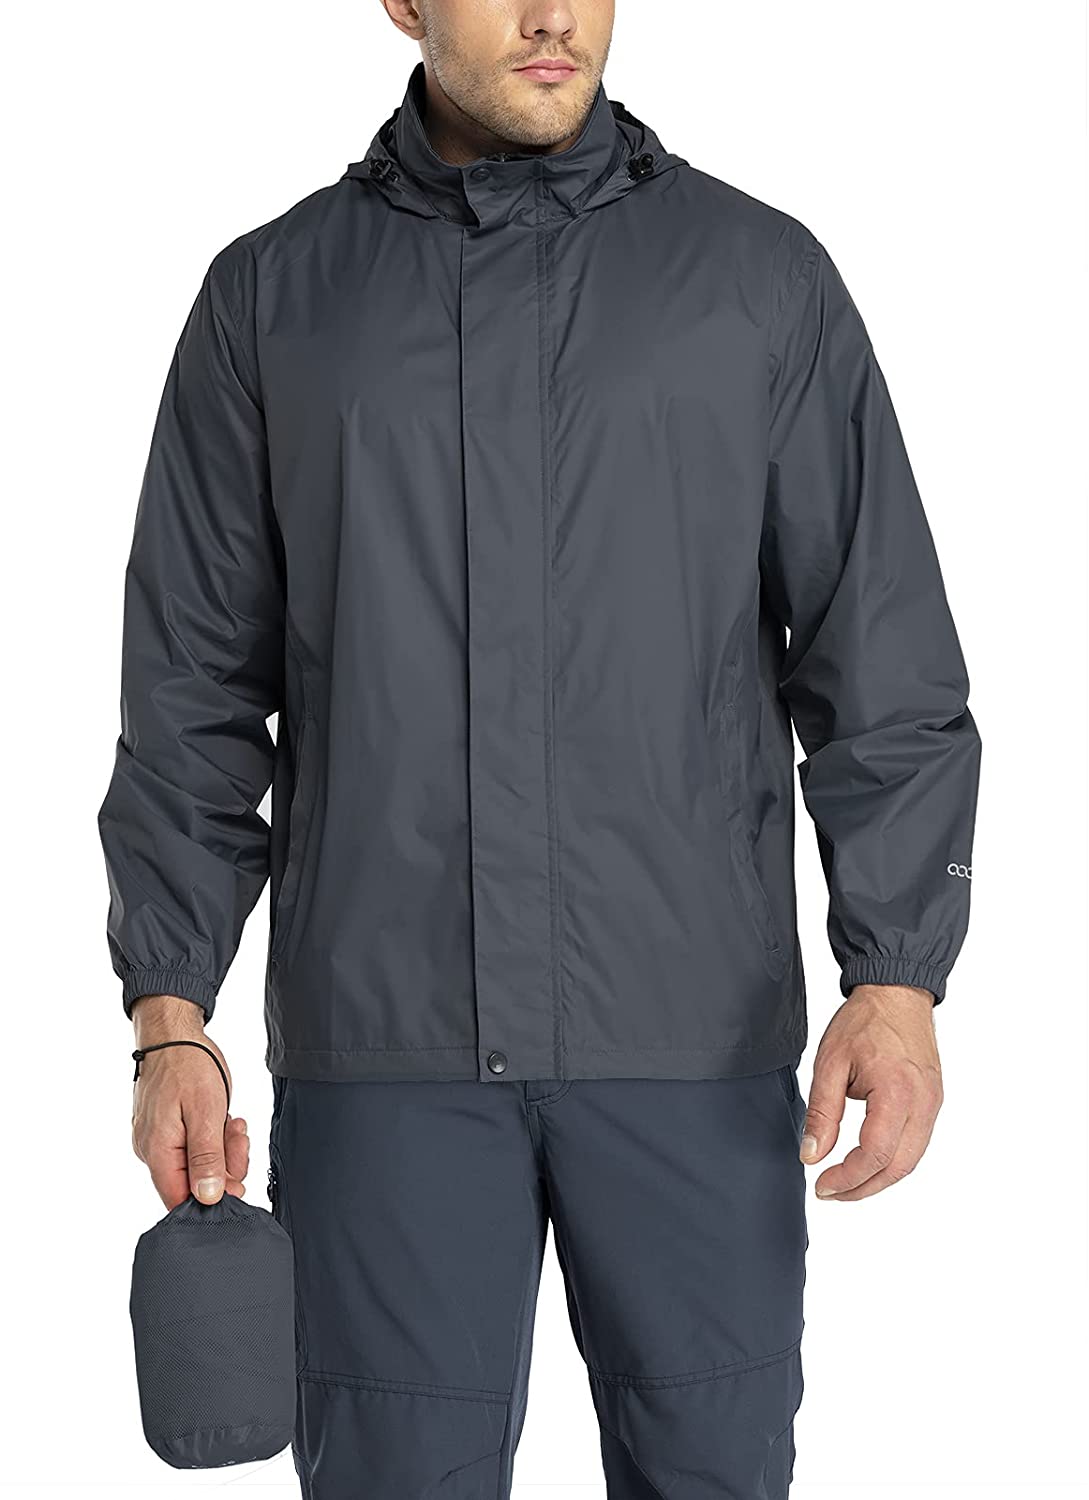 33,000ft Packable Rain Jacket Men's Lightweight Waterproof Rain Shell  Jacket Rai